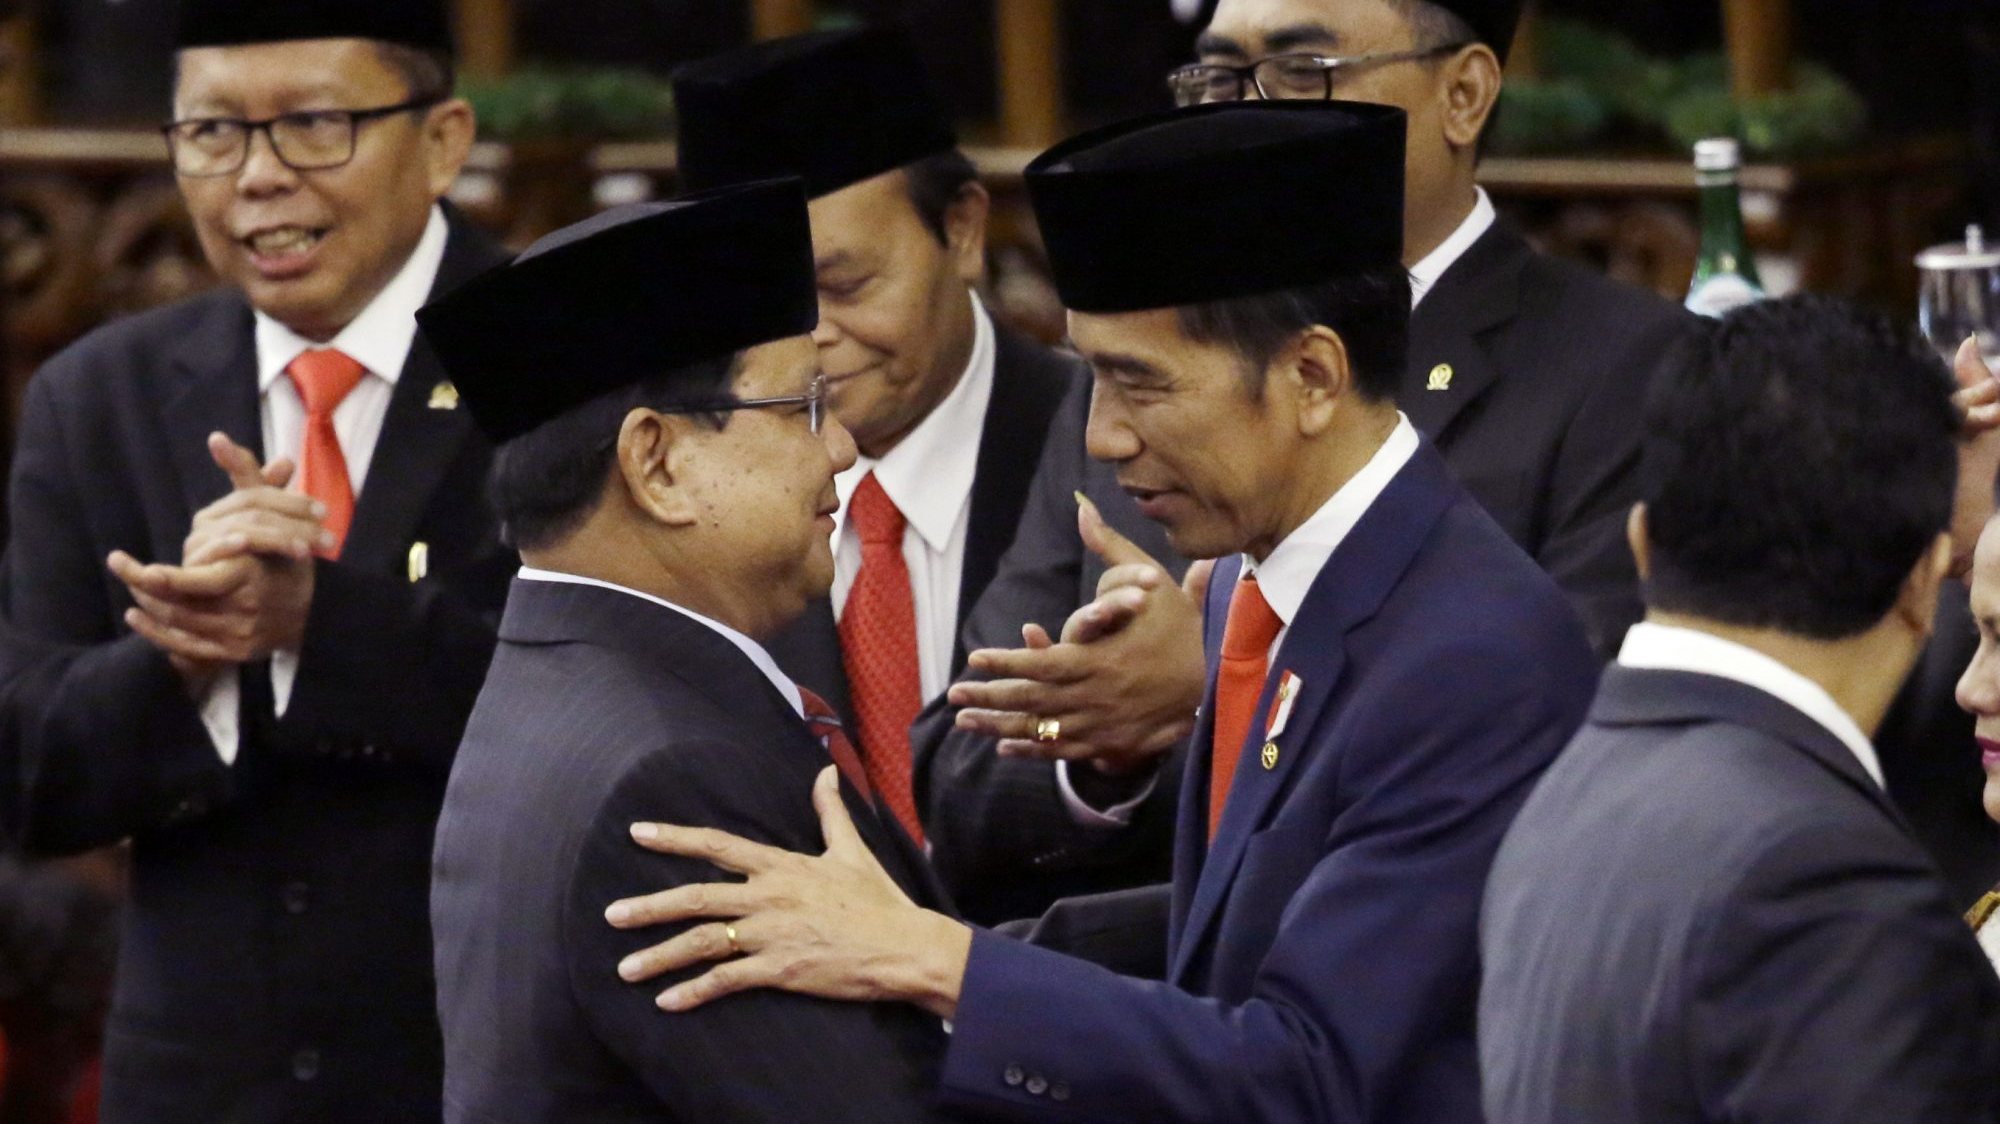 Se conseguir mais de 50% dos votos, Prabowo será eleito à primeira volta e sucederá a Joko Widodo